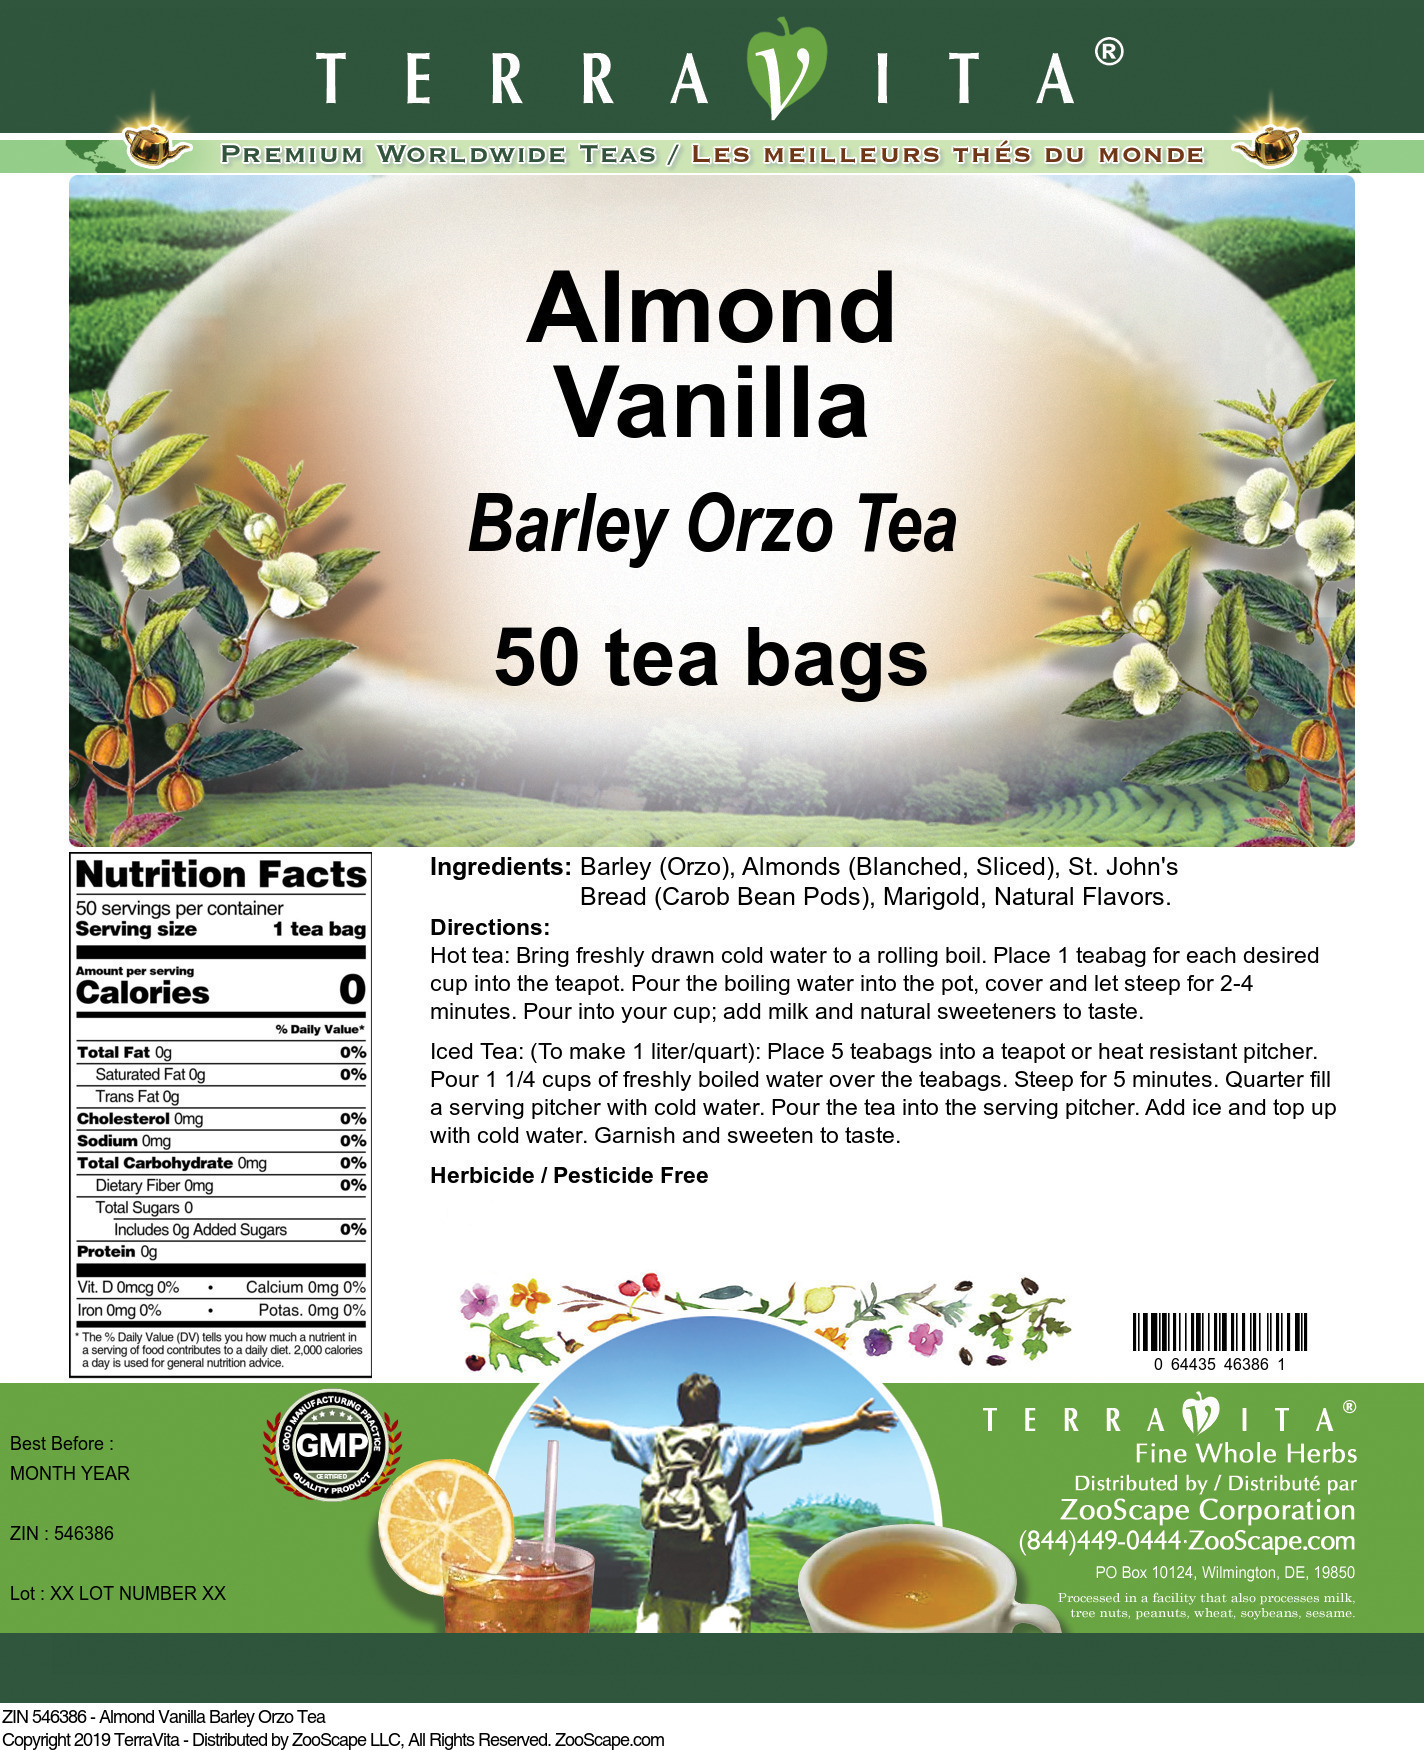 Almond Vanilla Barley Orzo Tea - Label